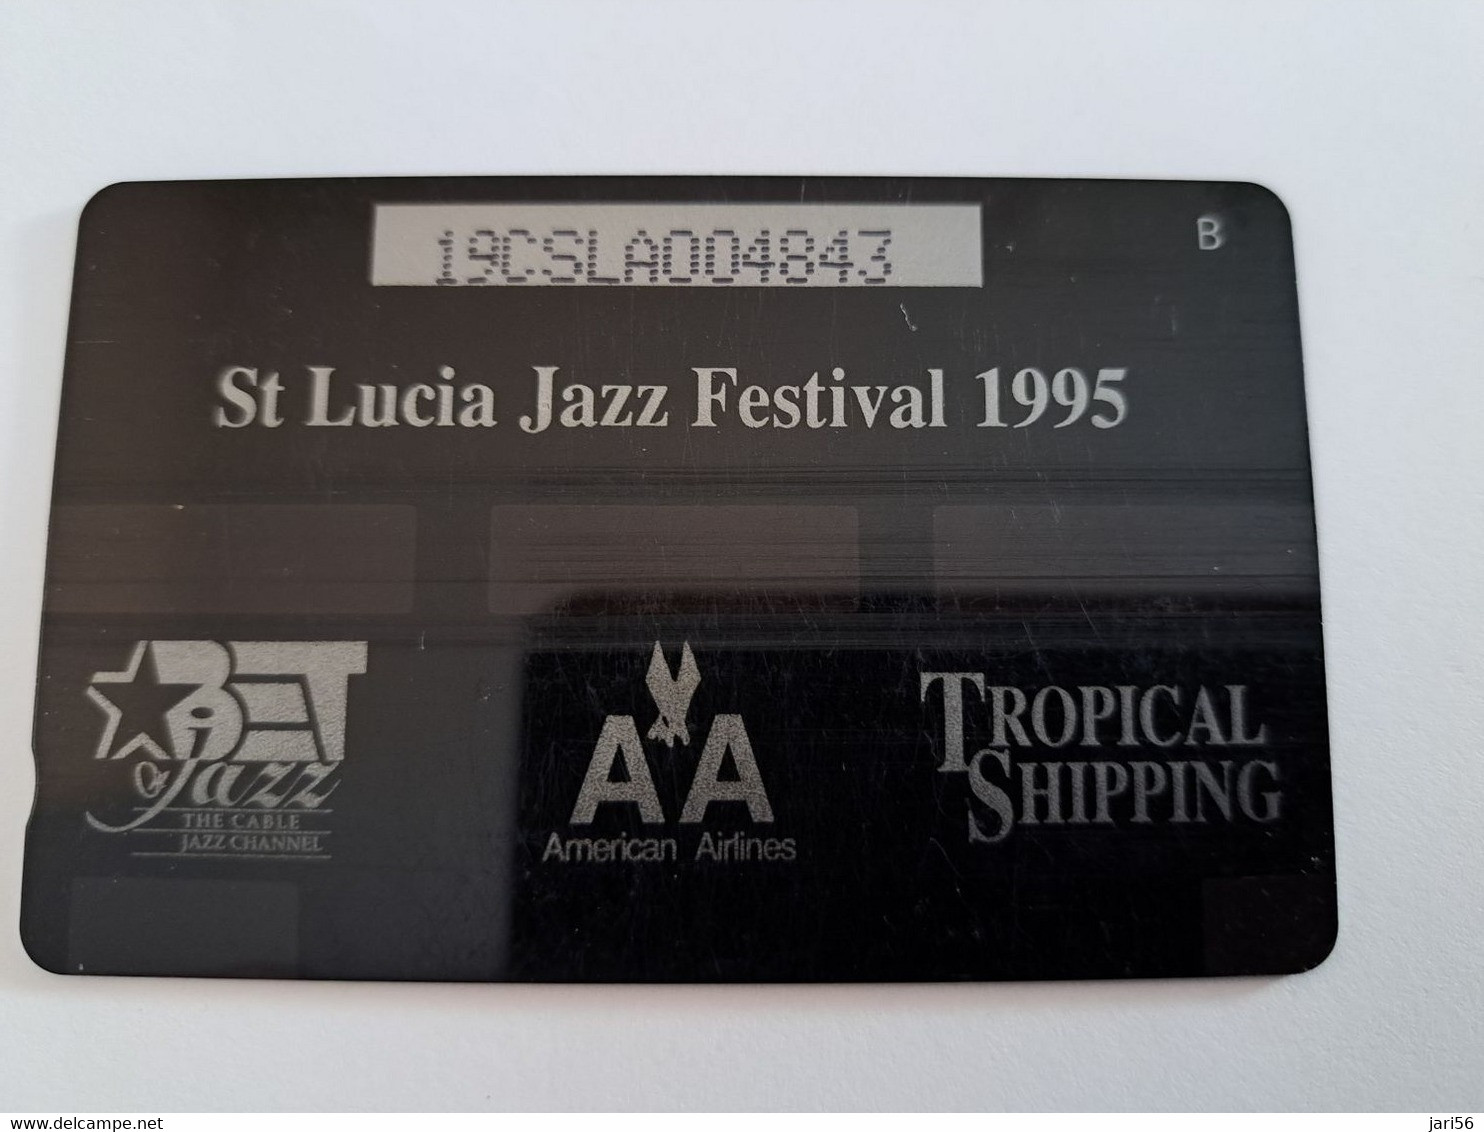 ST LUCIA    $ 20   CABLE & WIRELESS  STL-19A  19CSLA      JAZZ FESTIVAL 1995  Fine Used Card ** 10880** - Saint Lucia